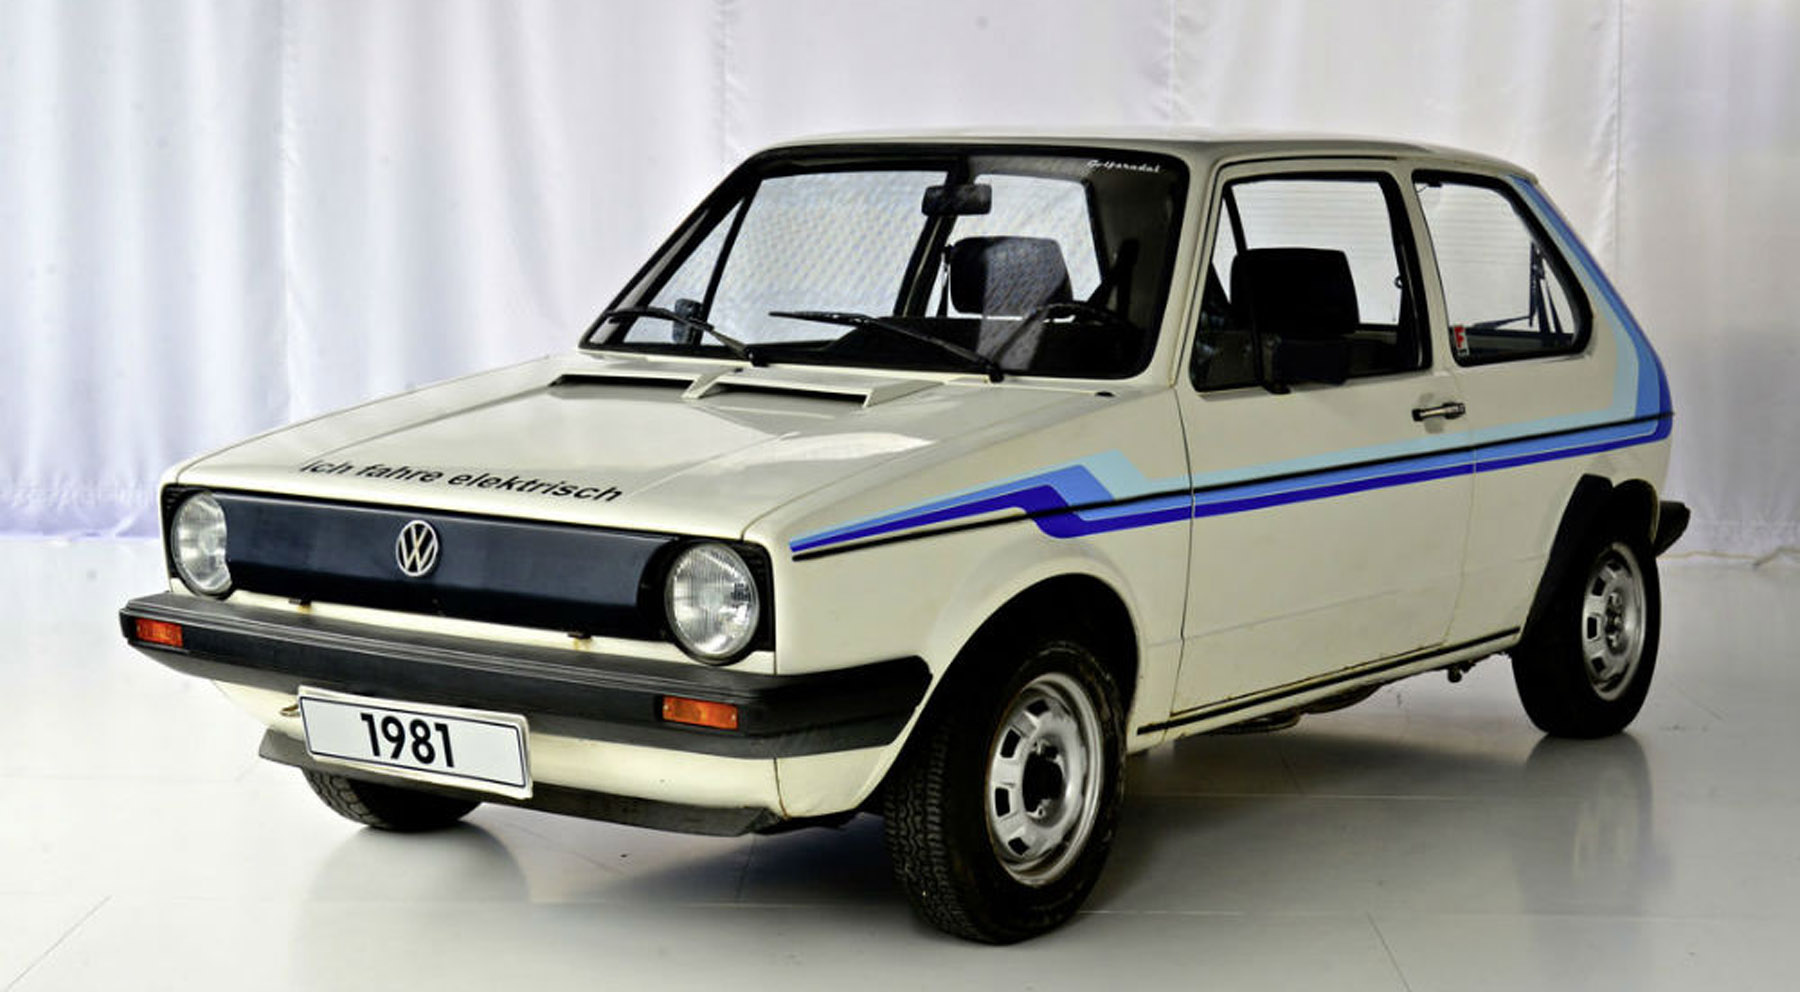 Volkswagen Golf CityStromer (1981)